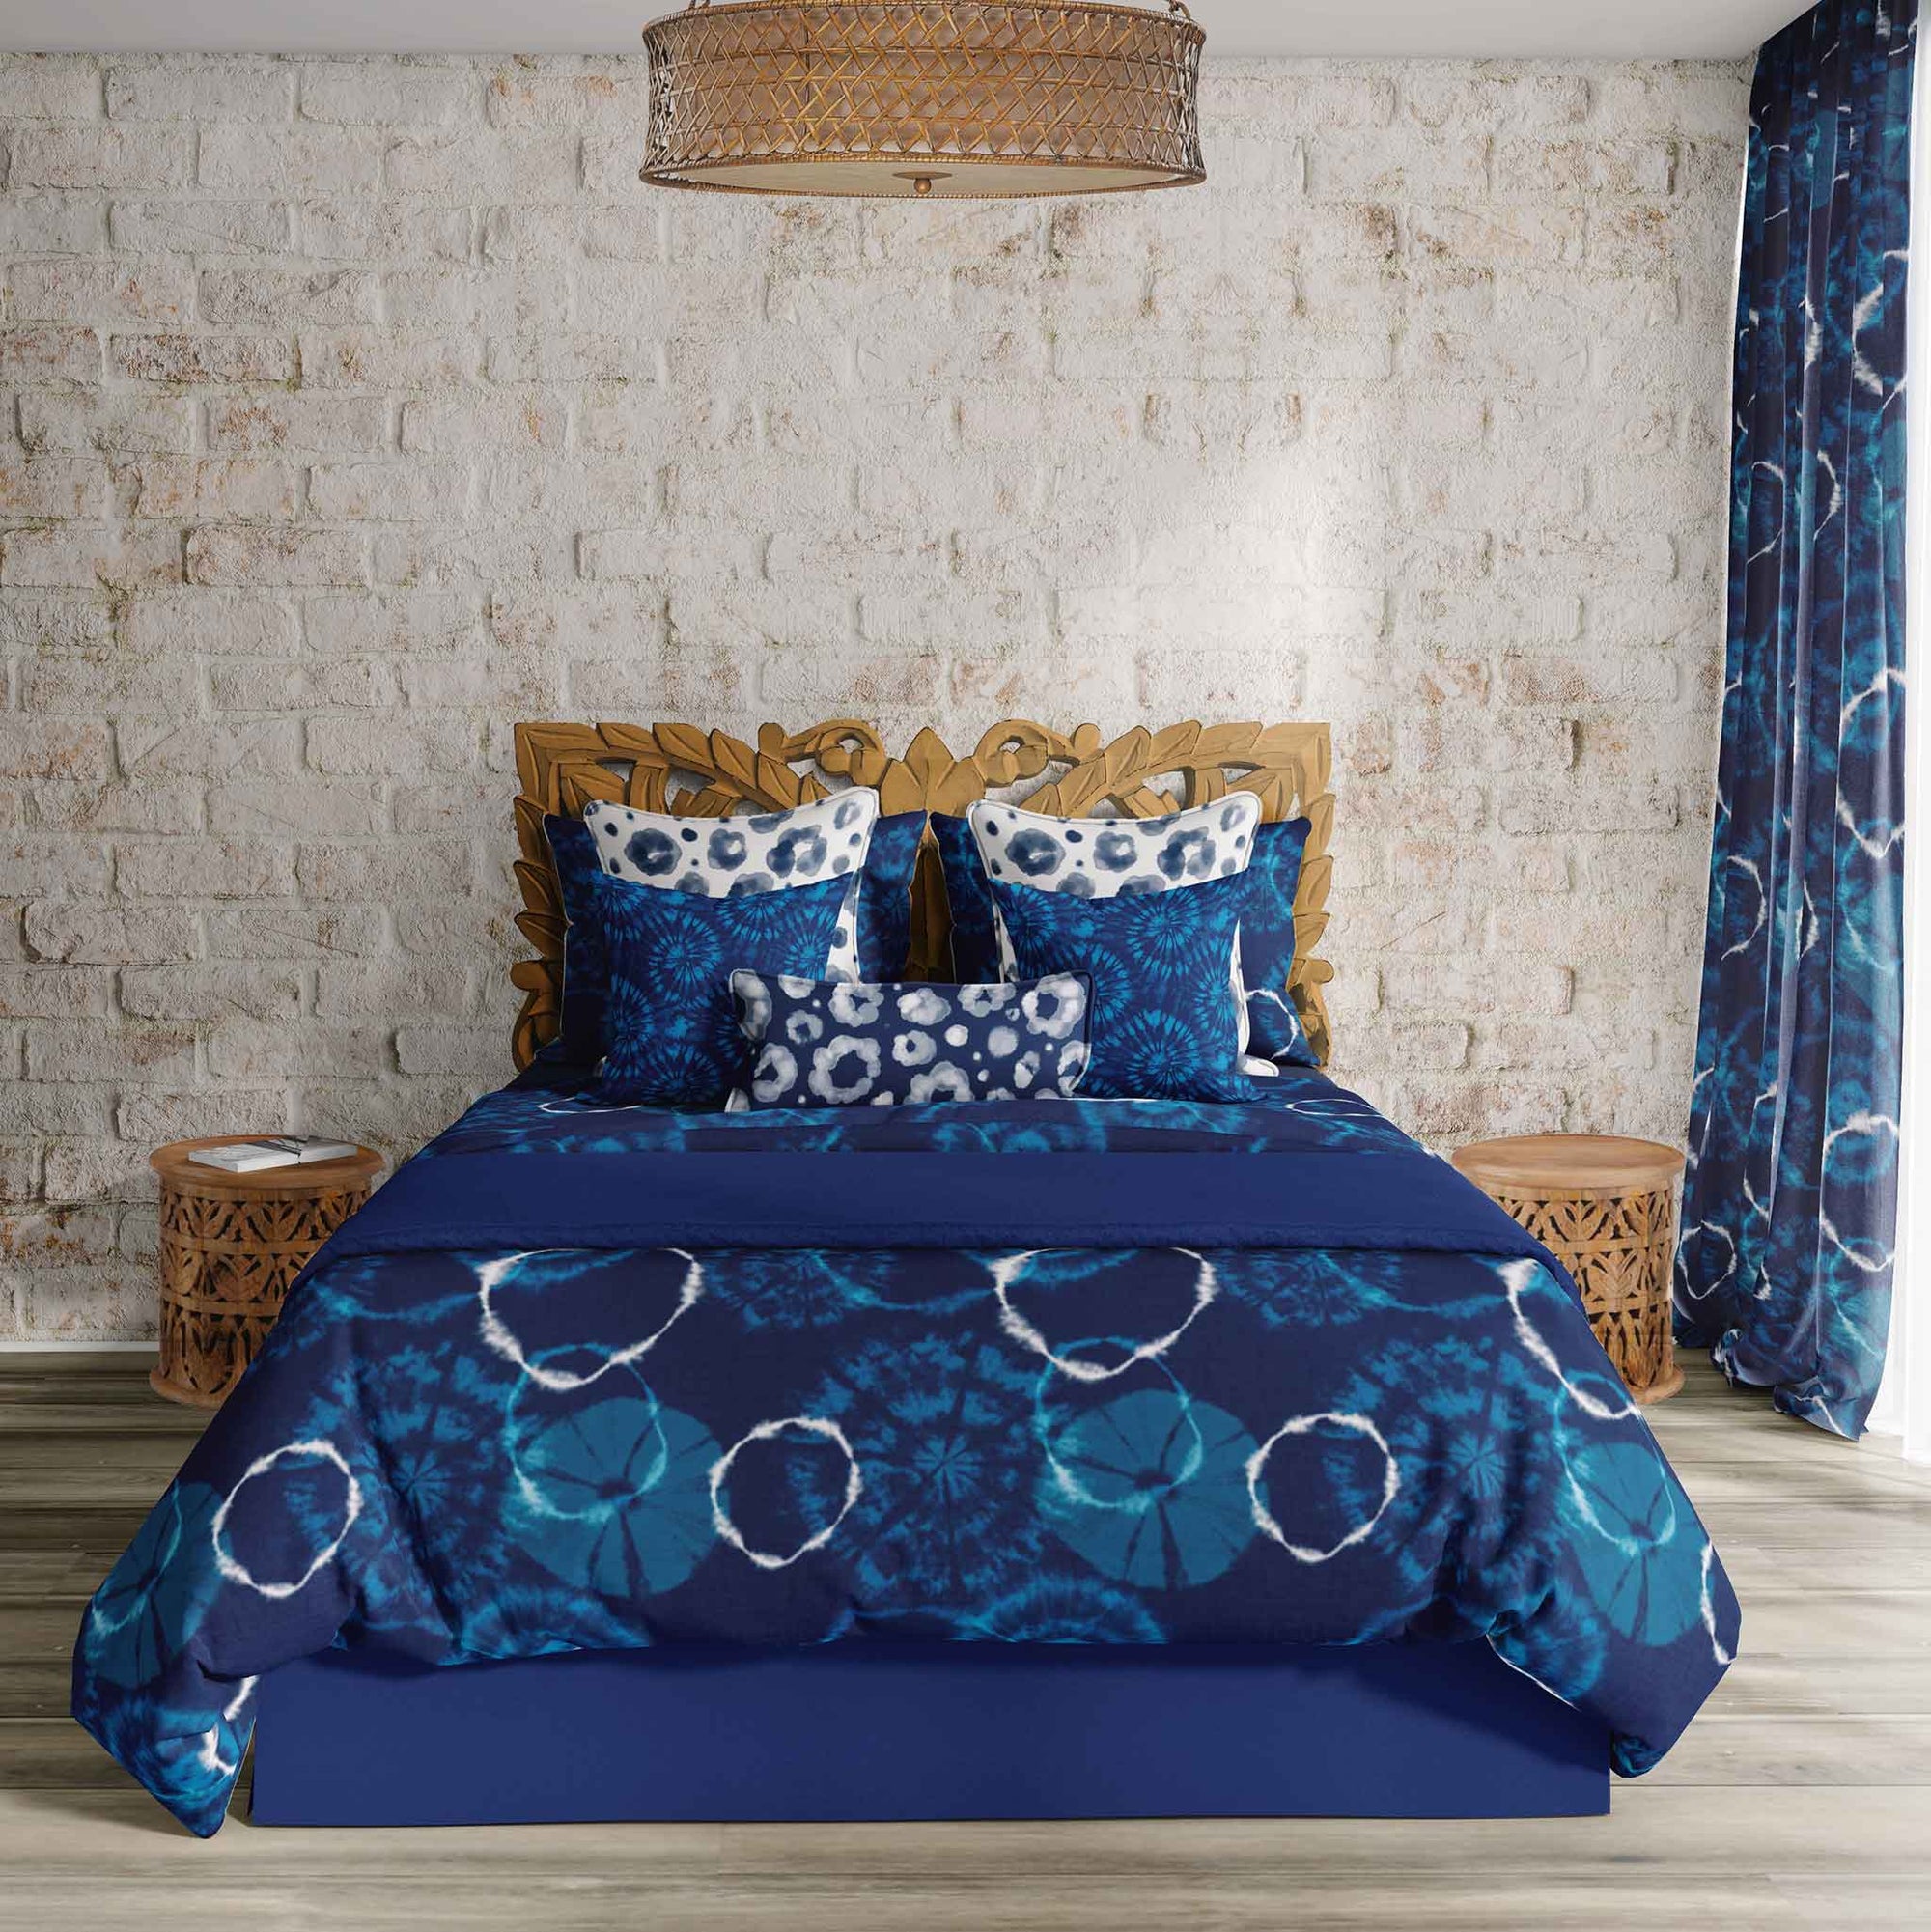 Shibori Indigo Tie Dye Dream bedding collection also available in curtains and wallpaper.